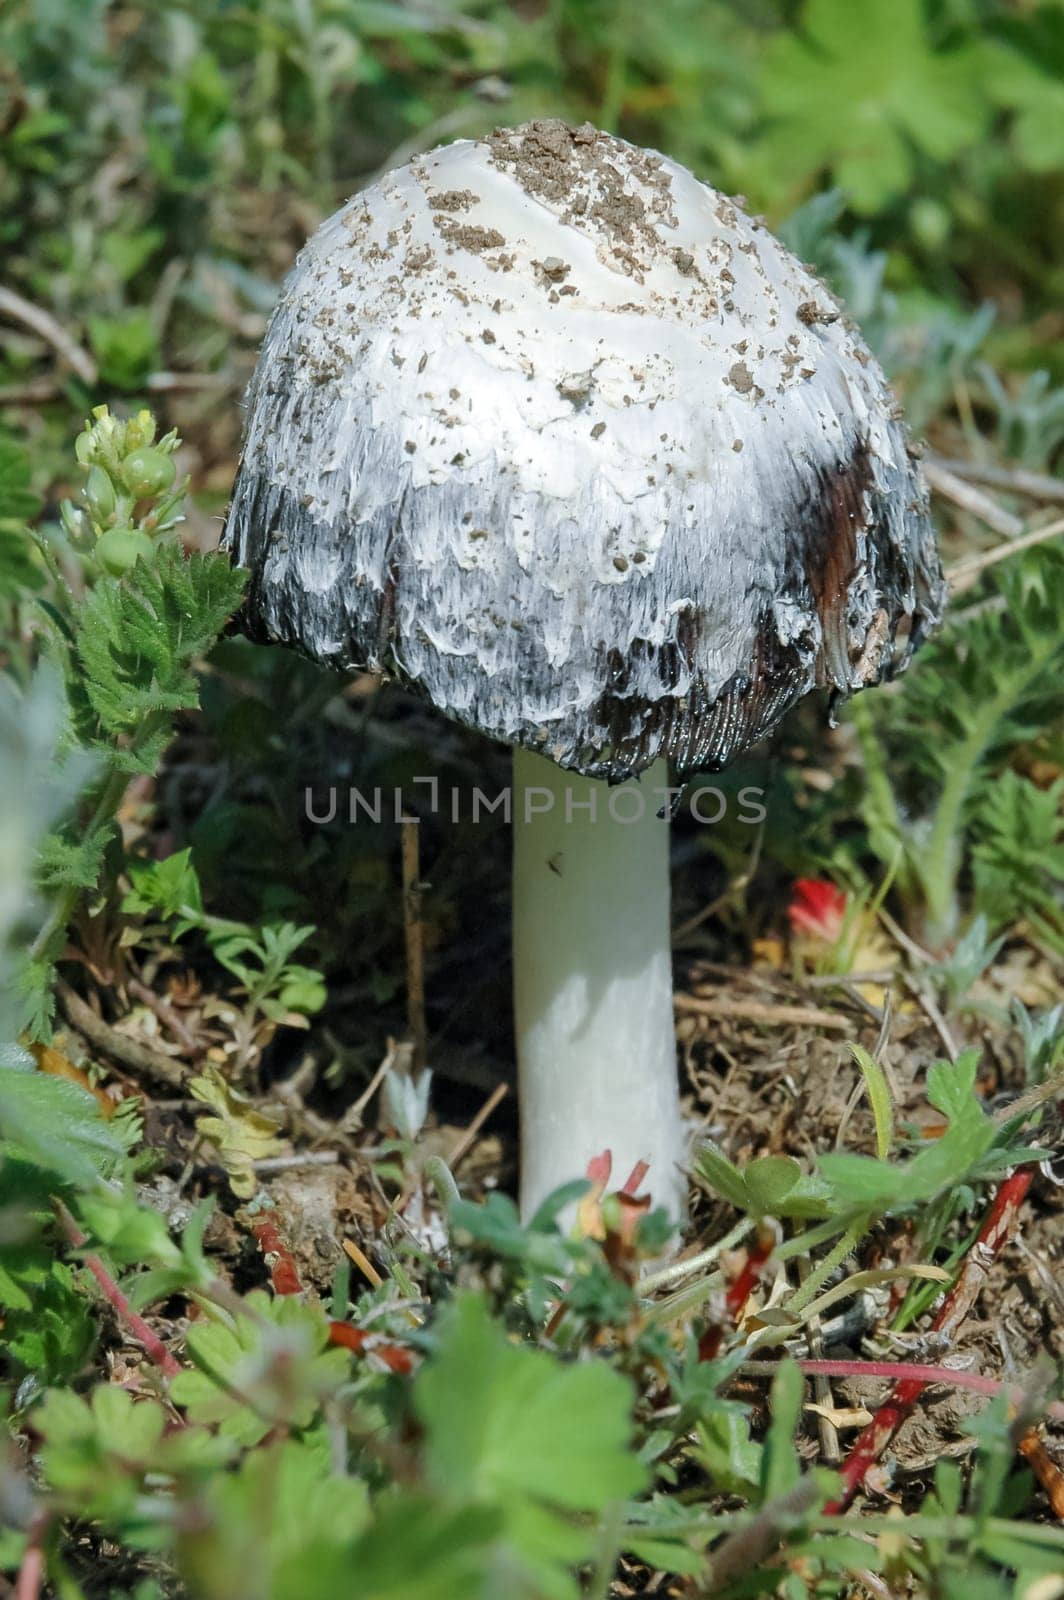 (Coprinus comatus), an inedible mushroom among grassy vegetation